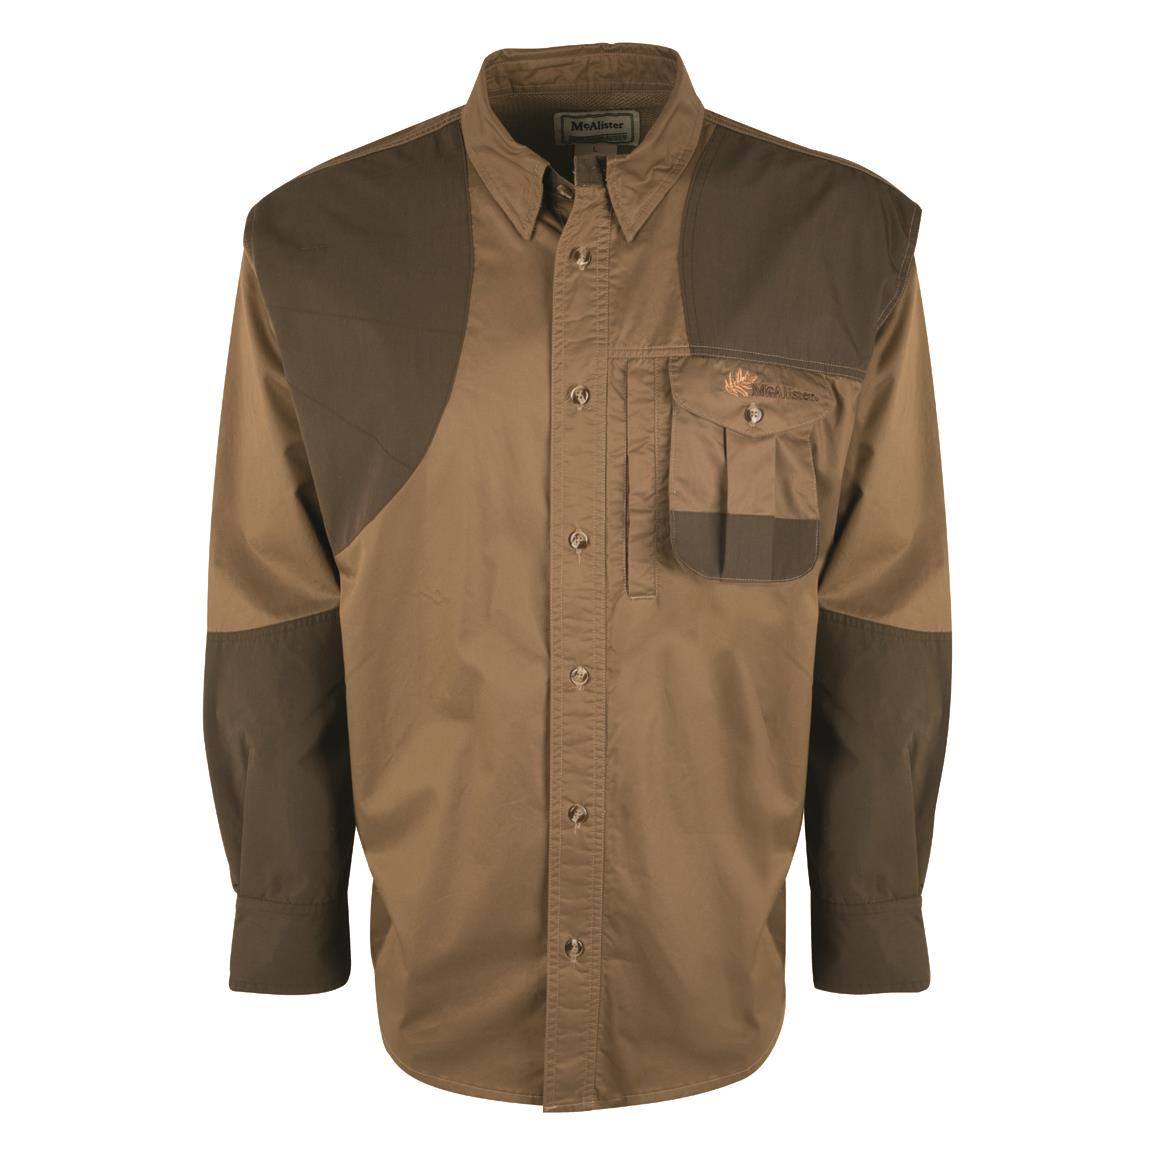 Drake Waterfowl Men's McAlister Upland Field Shirt, Olive/Tan